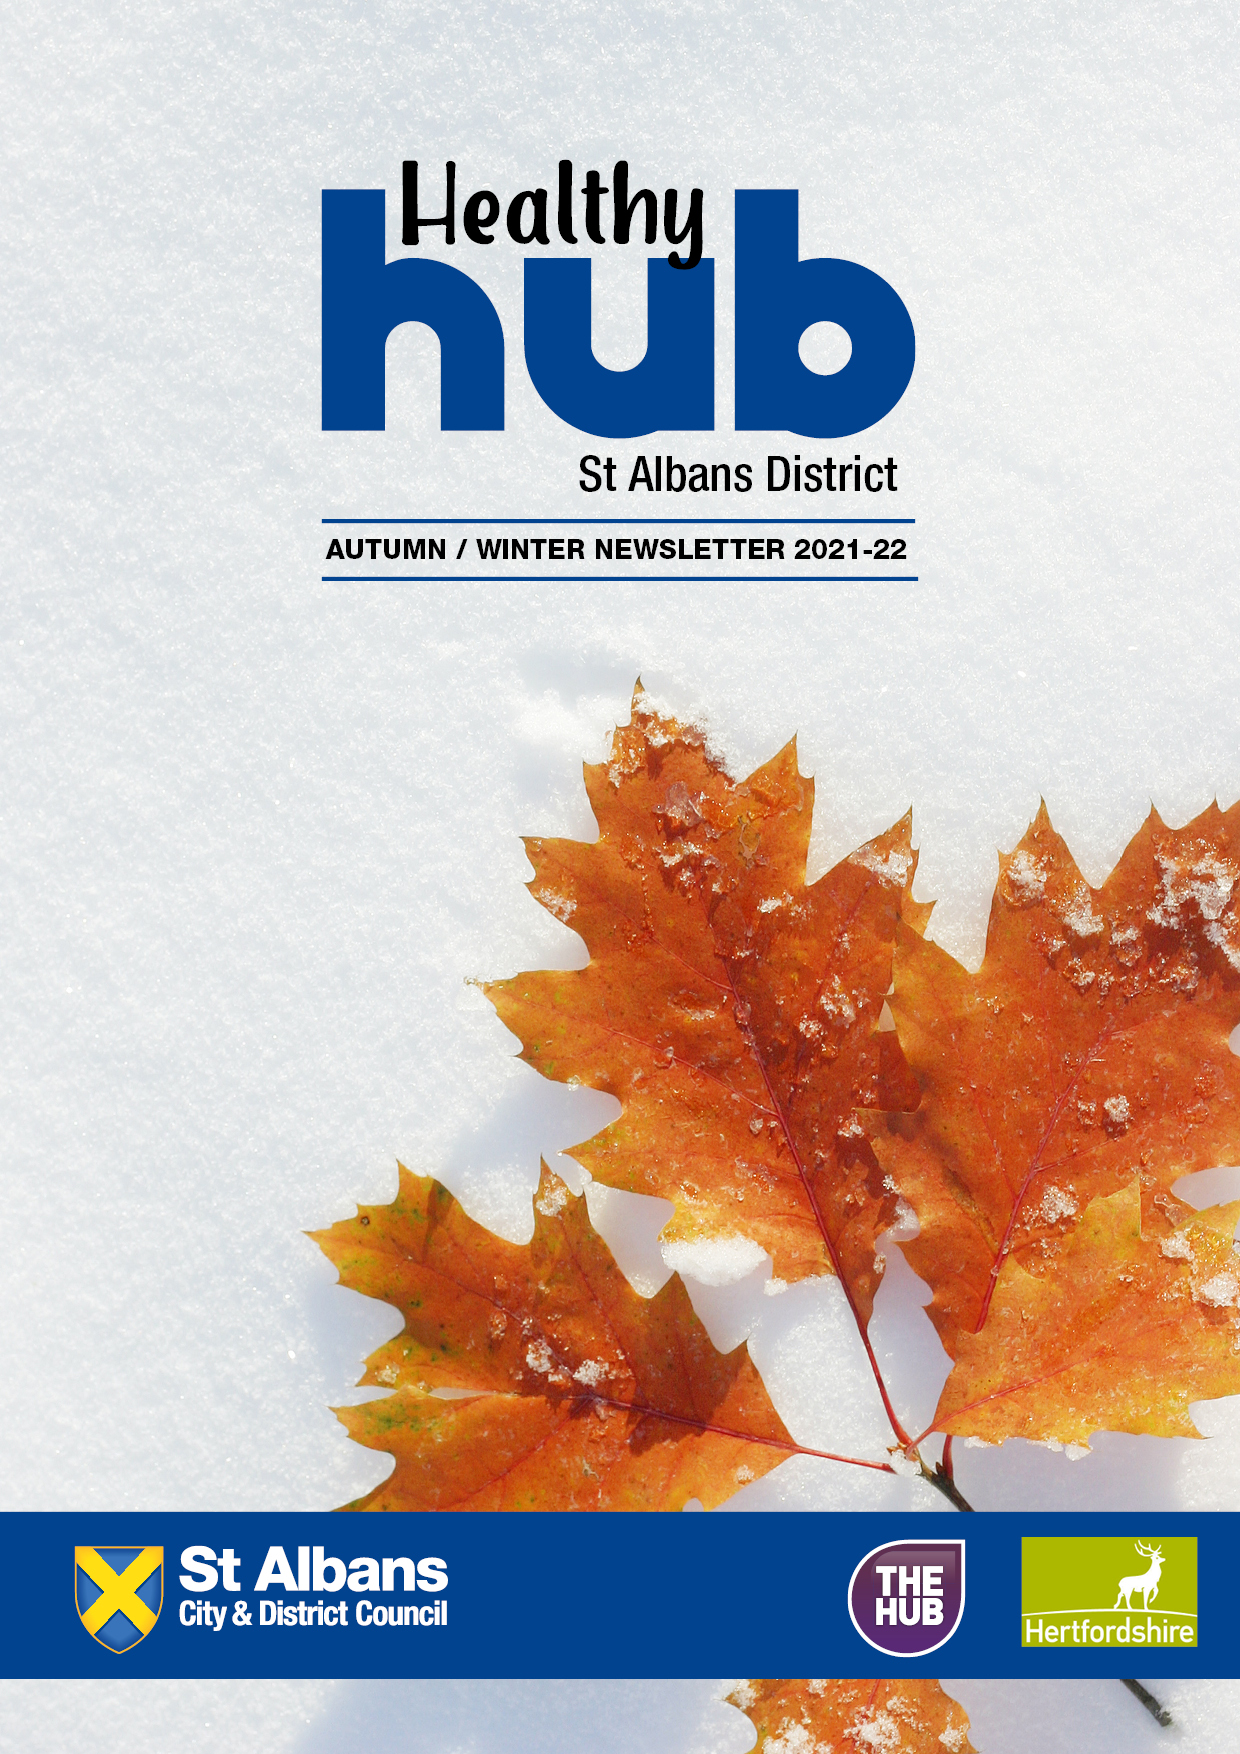 Healthy Hub Newsletter - Autumn Winter 2021-22